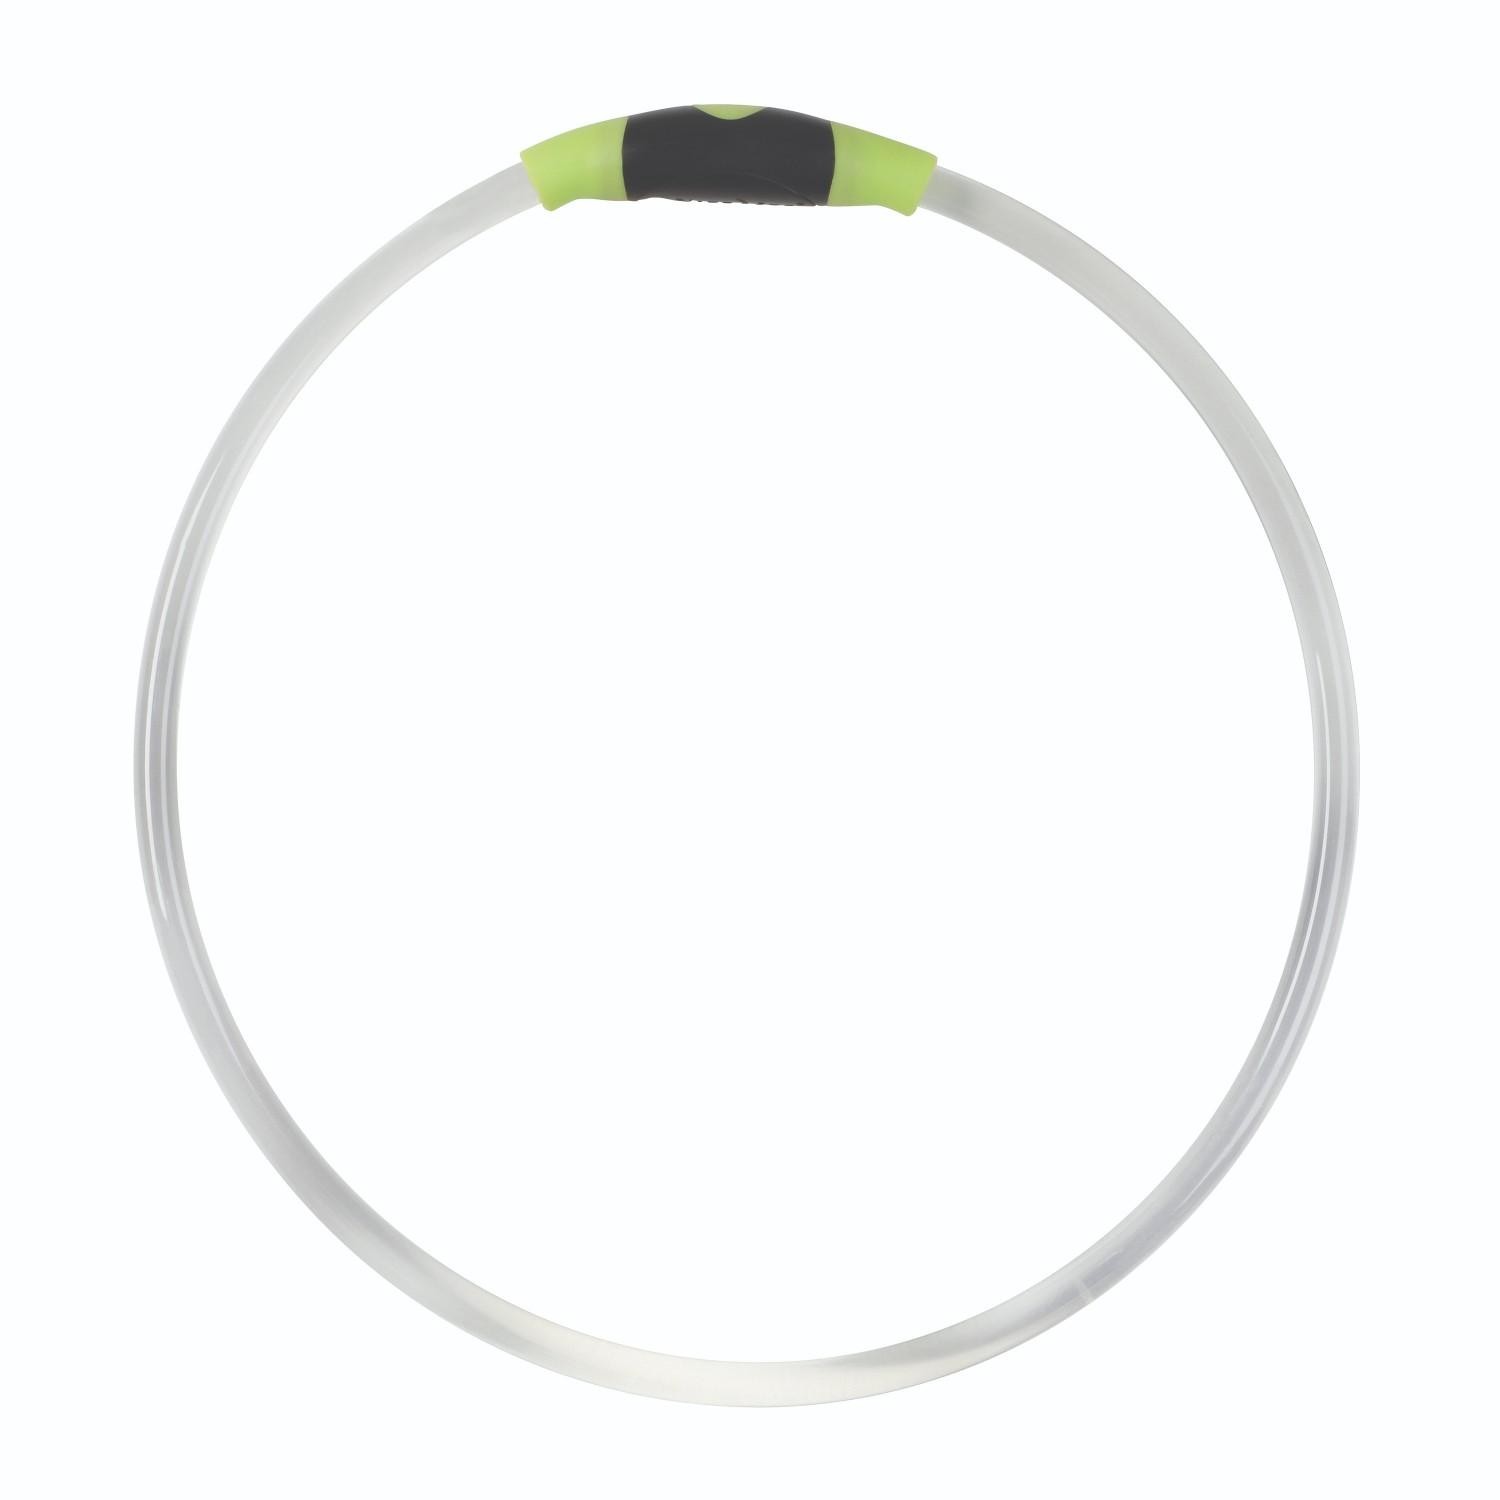 Nite Ize Nitehowl LED Safety Necklace - Green